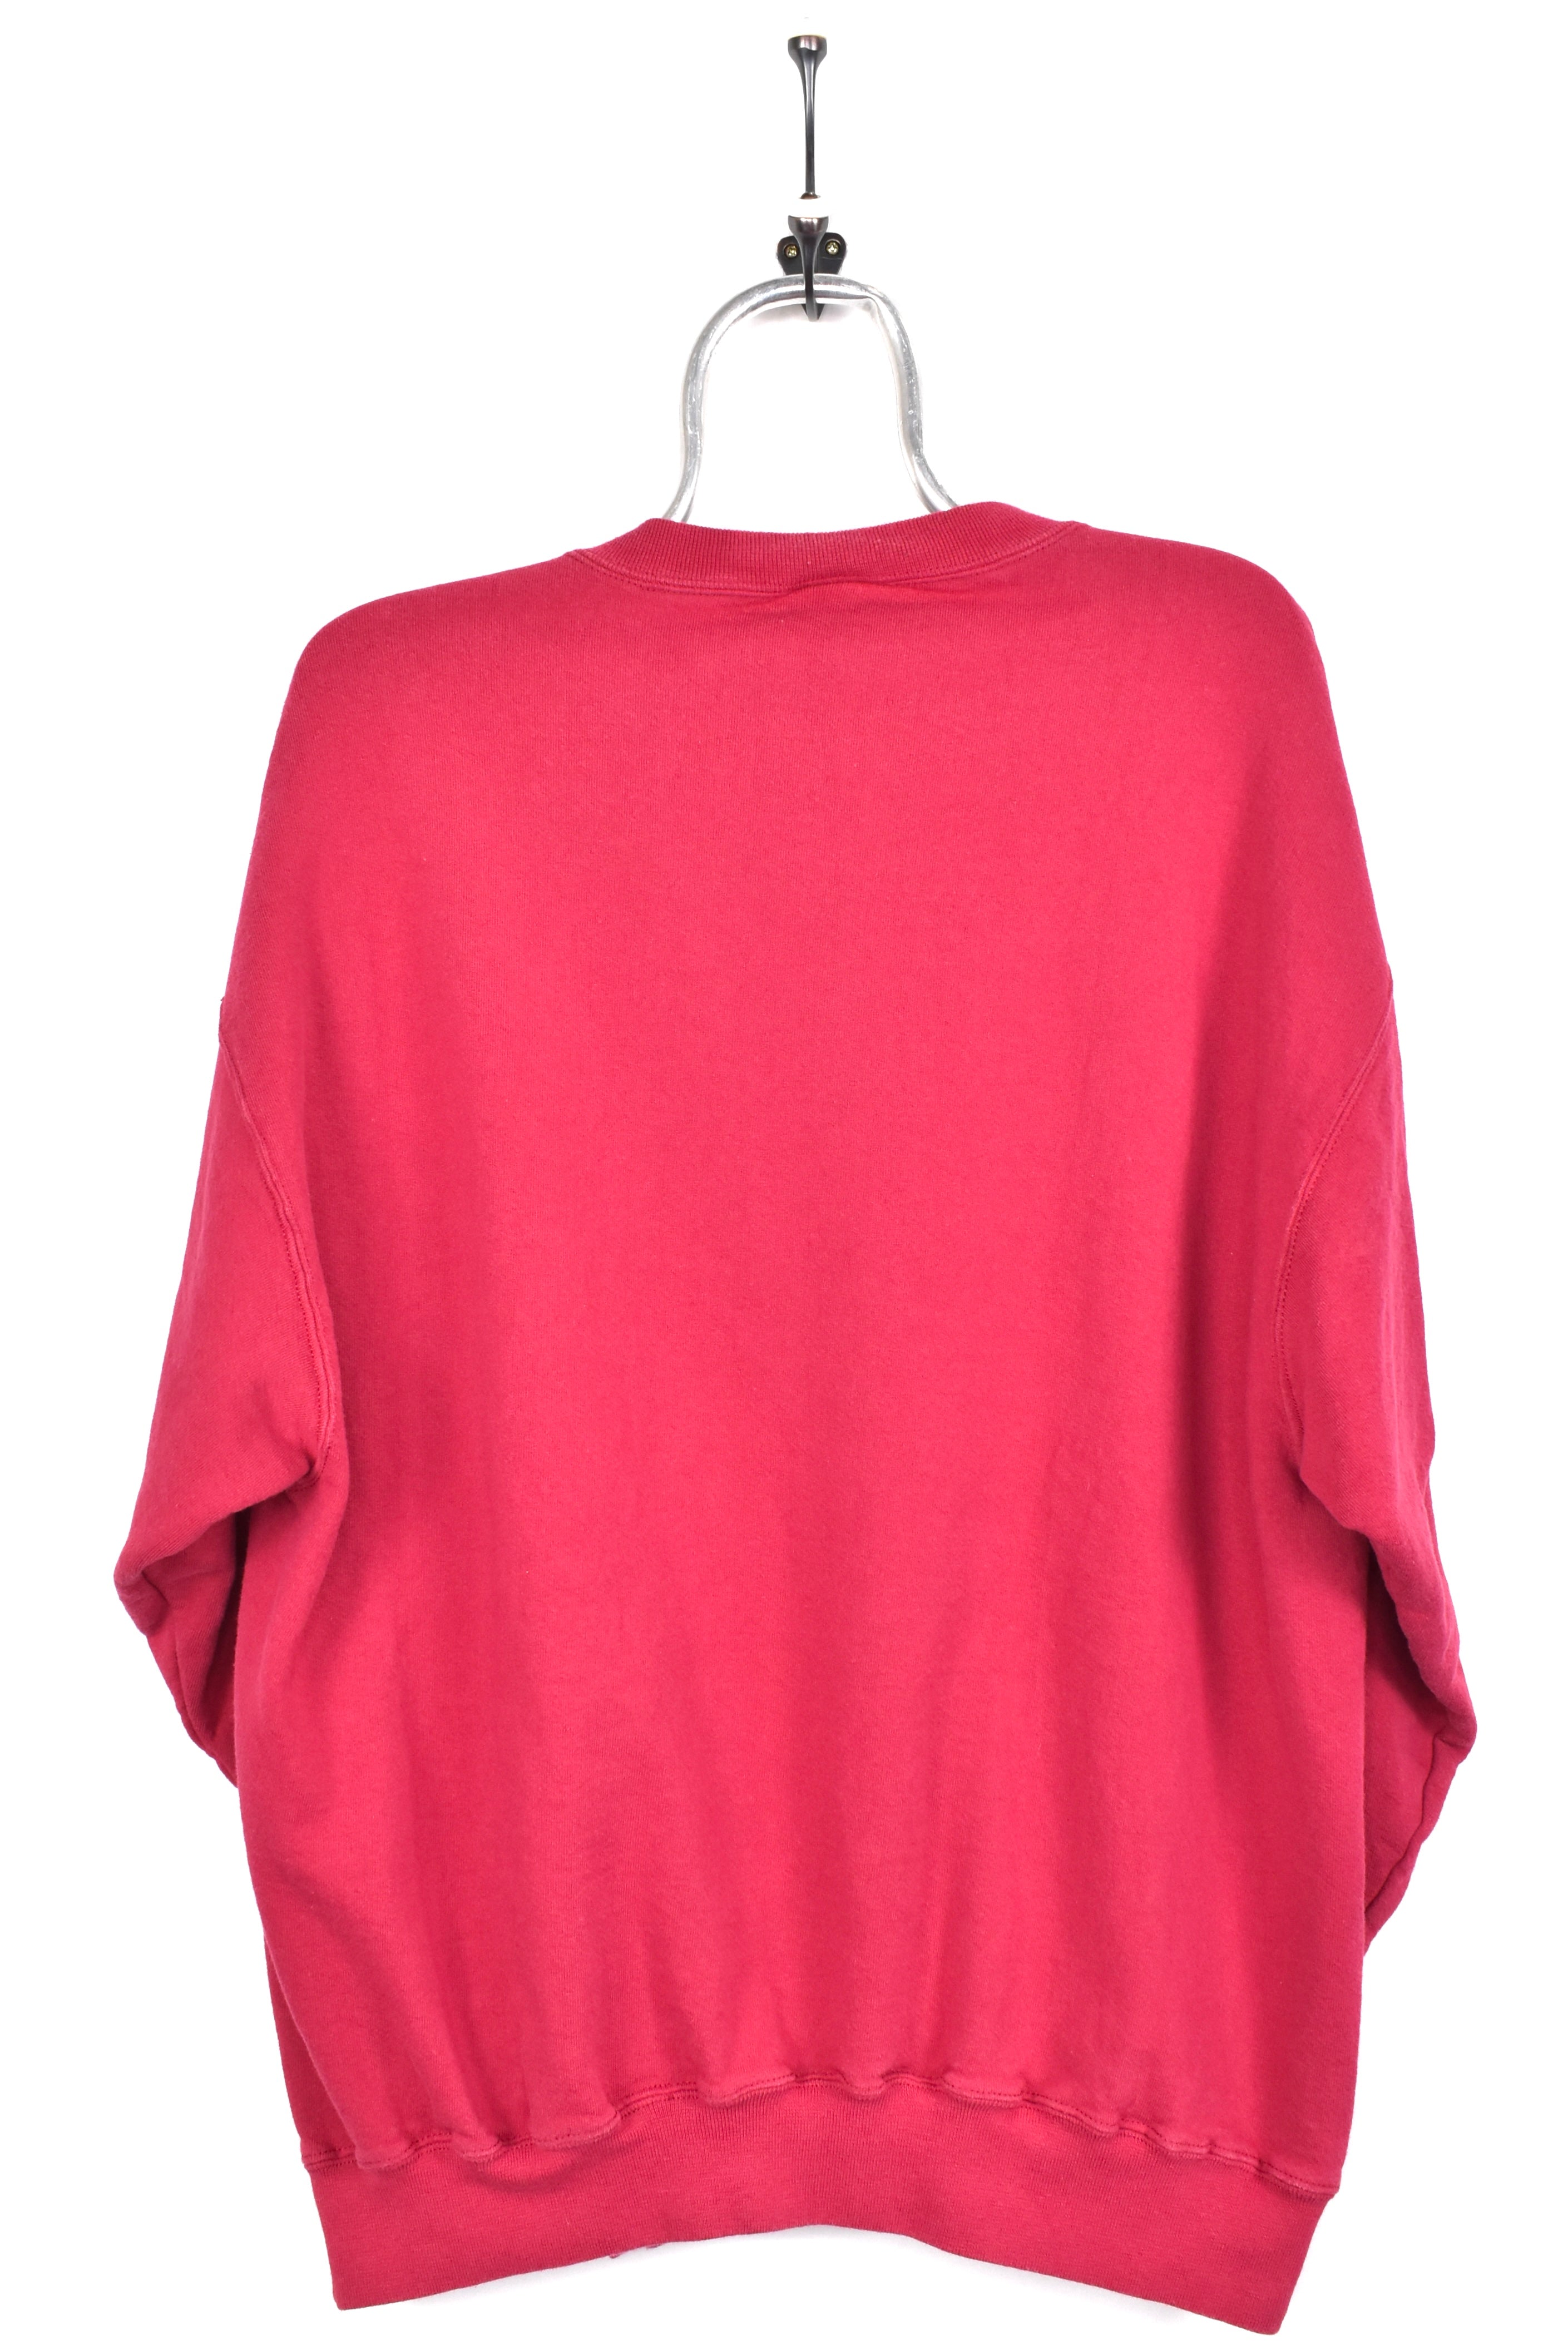 Vintage Russell Athletic sweatshirt, red blank crewneck - AU XL OTHER